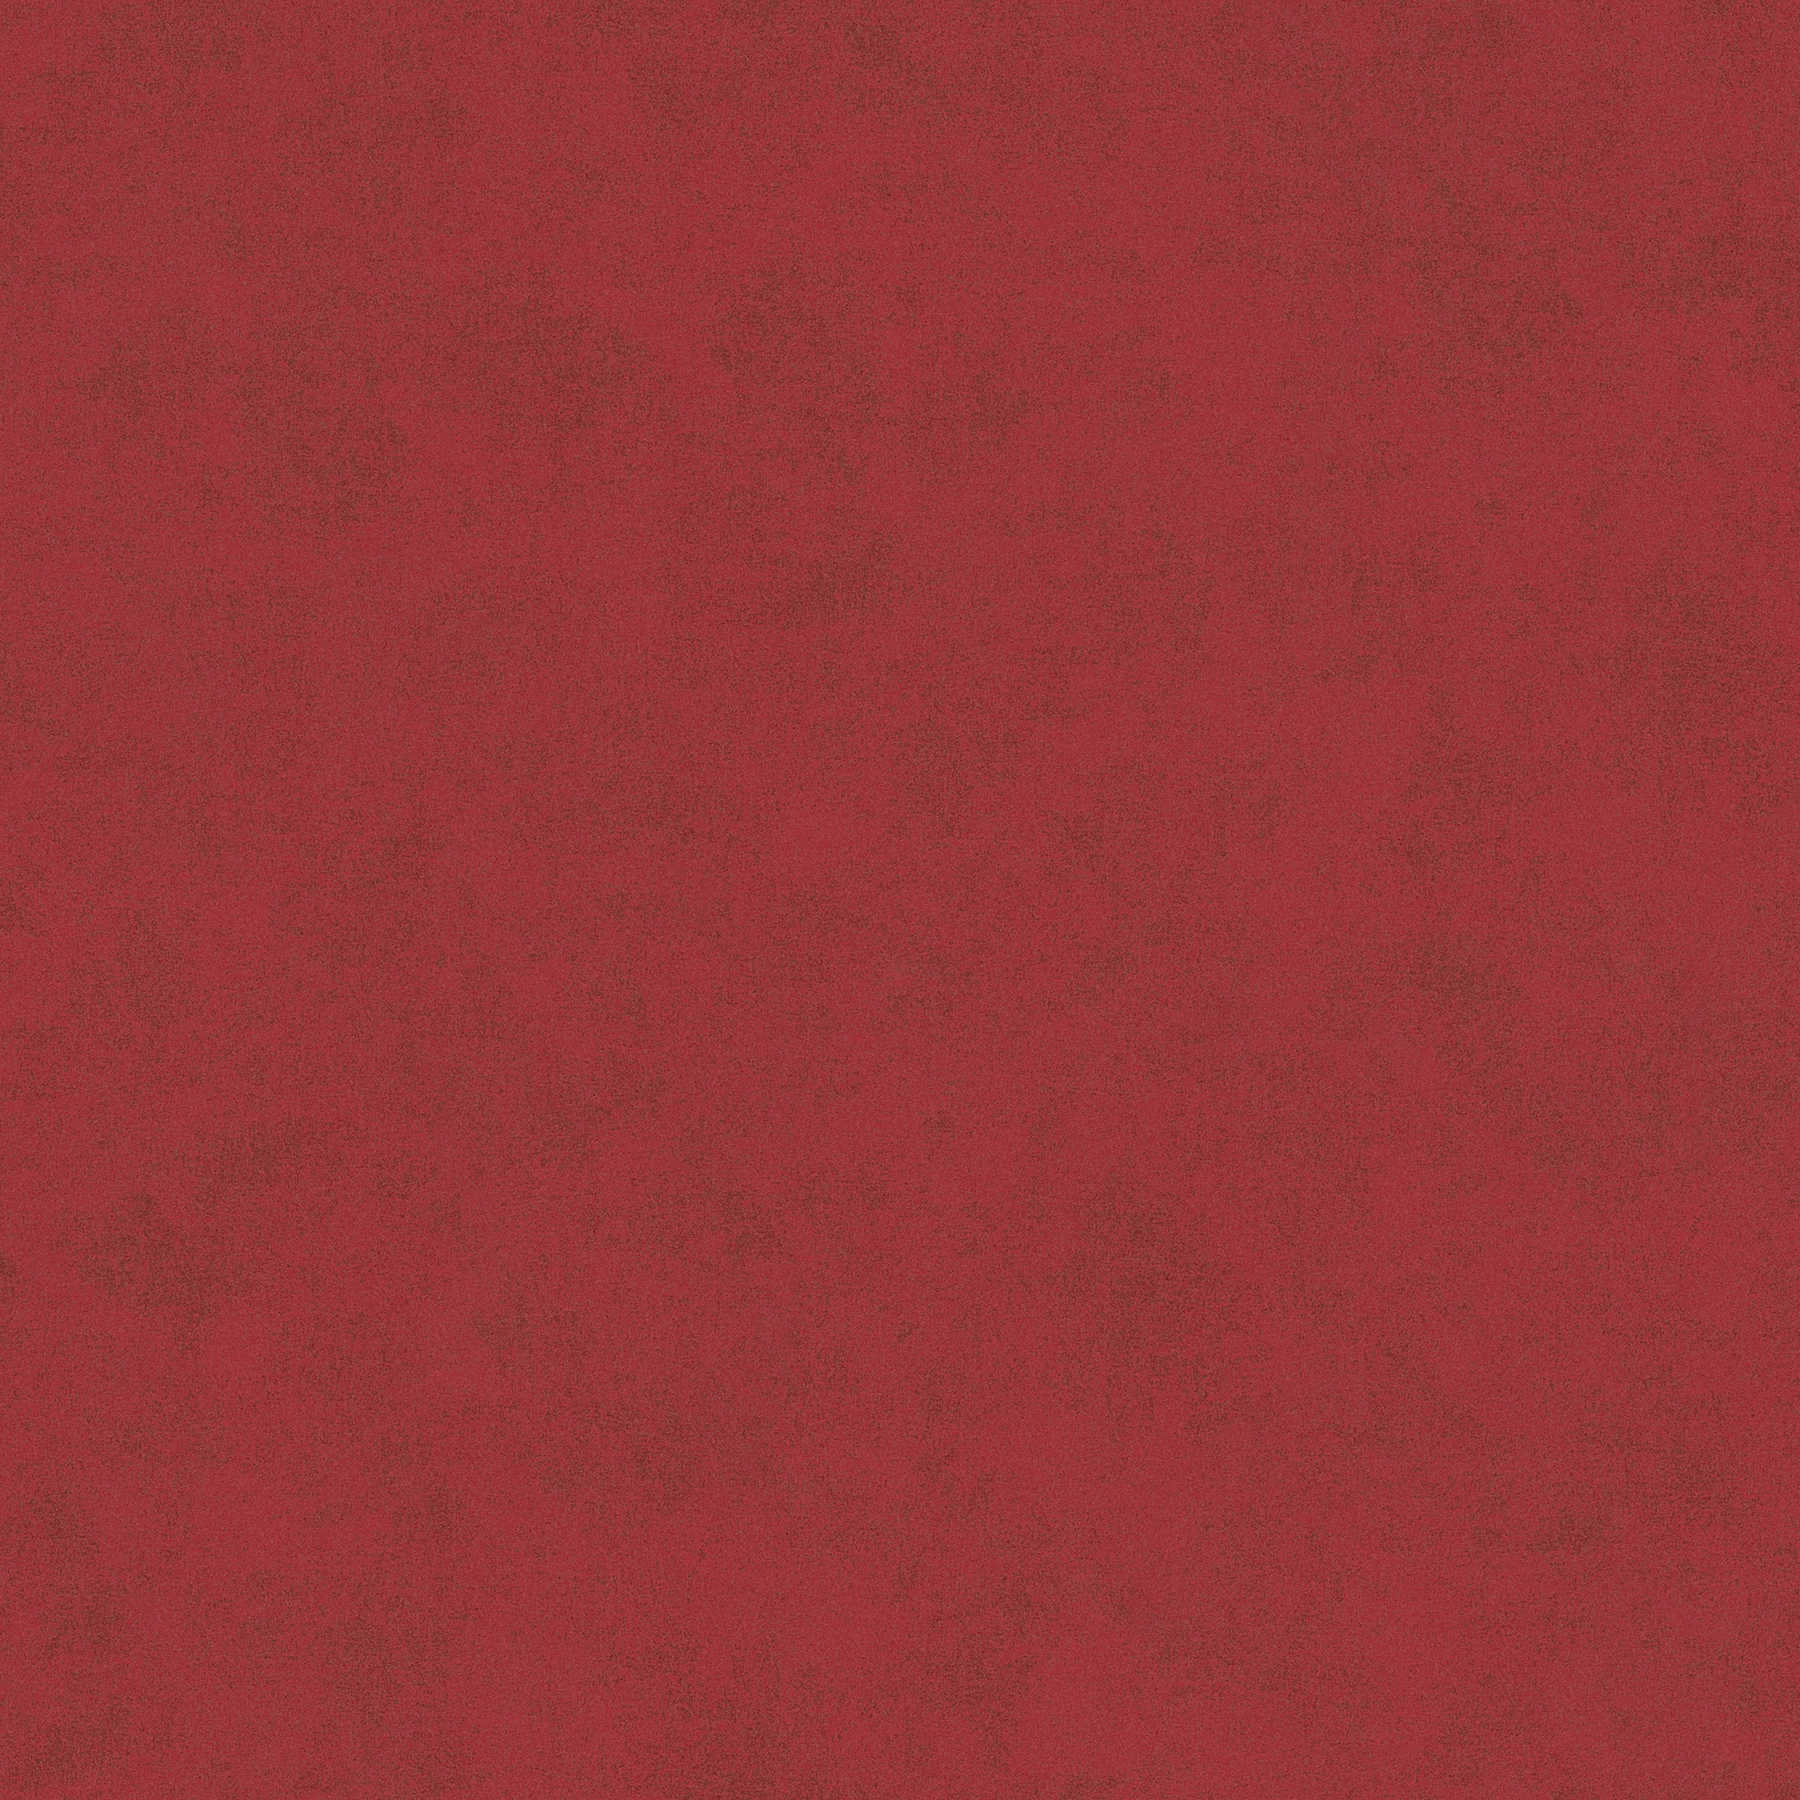 Effen vliesbehang met gevlekte structuur - rood
